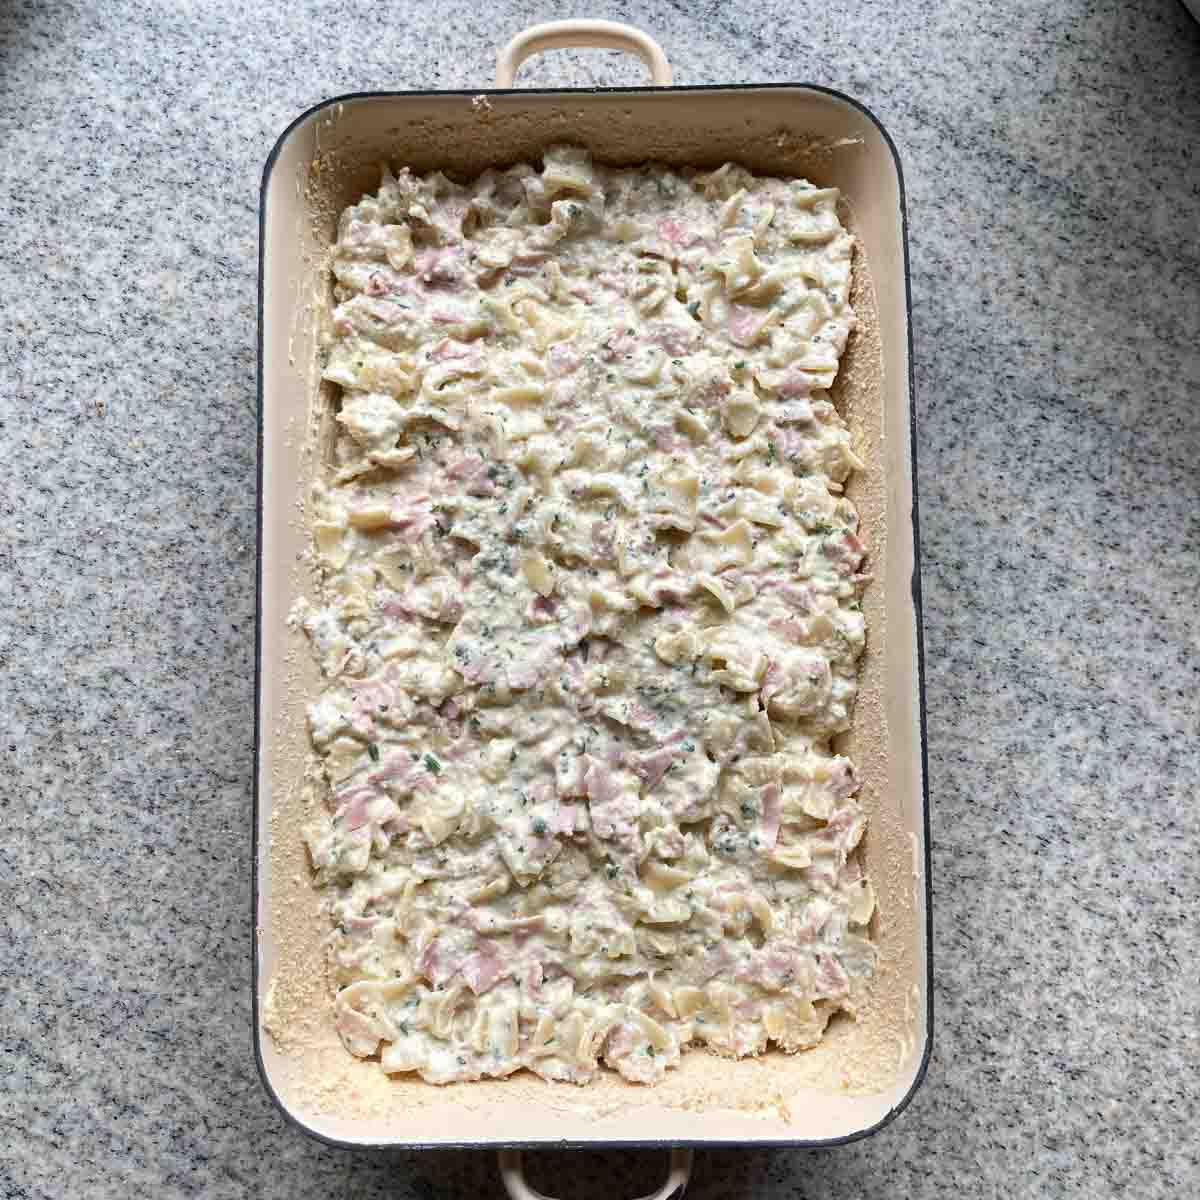 Schinkenfleckerl vor dem Backen. - Baking pan with Schinkenfleckerl mass before baking.